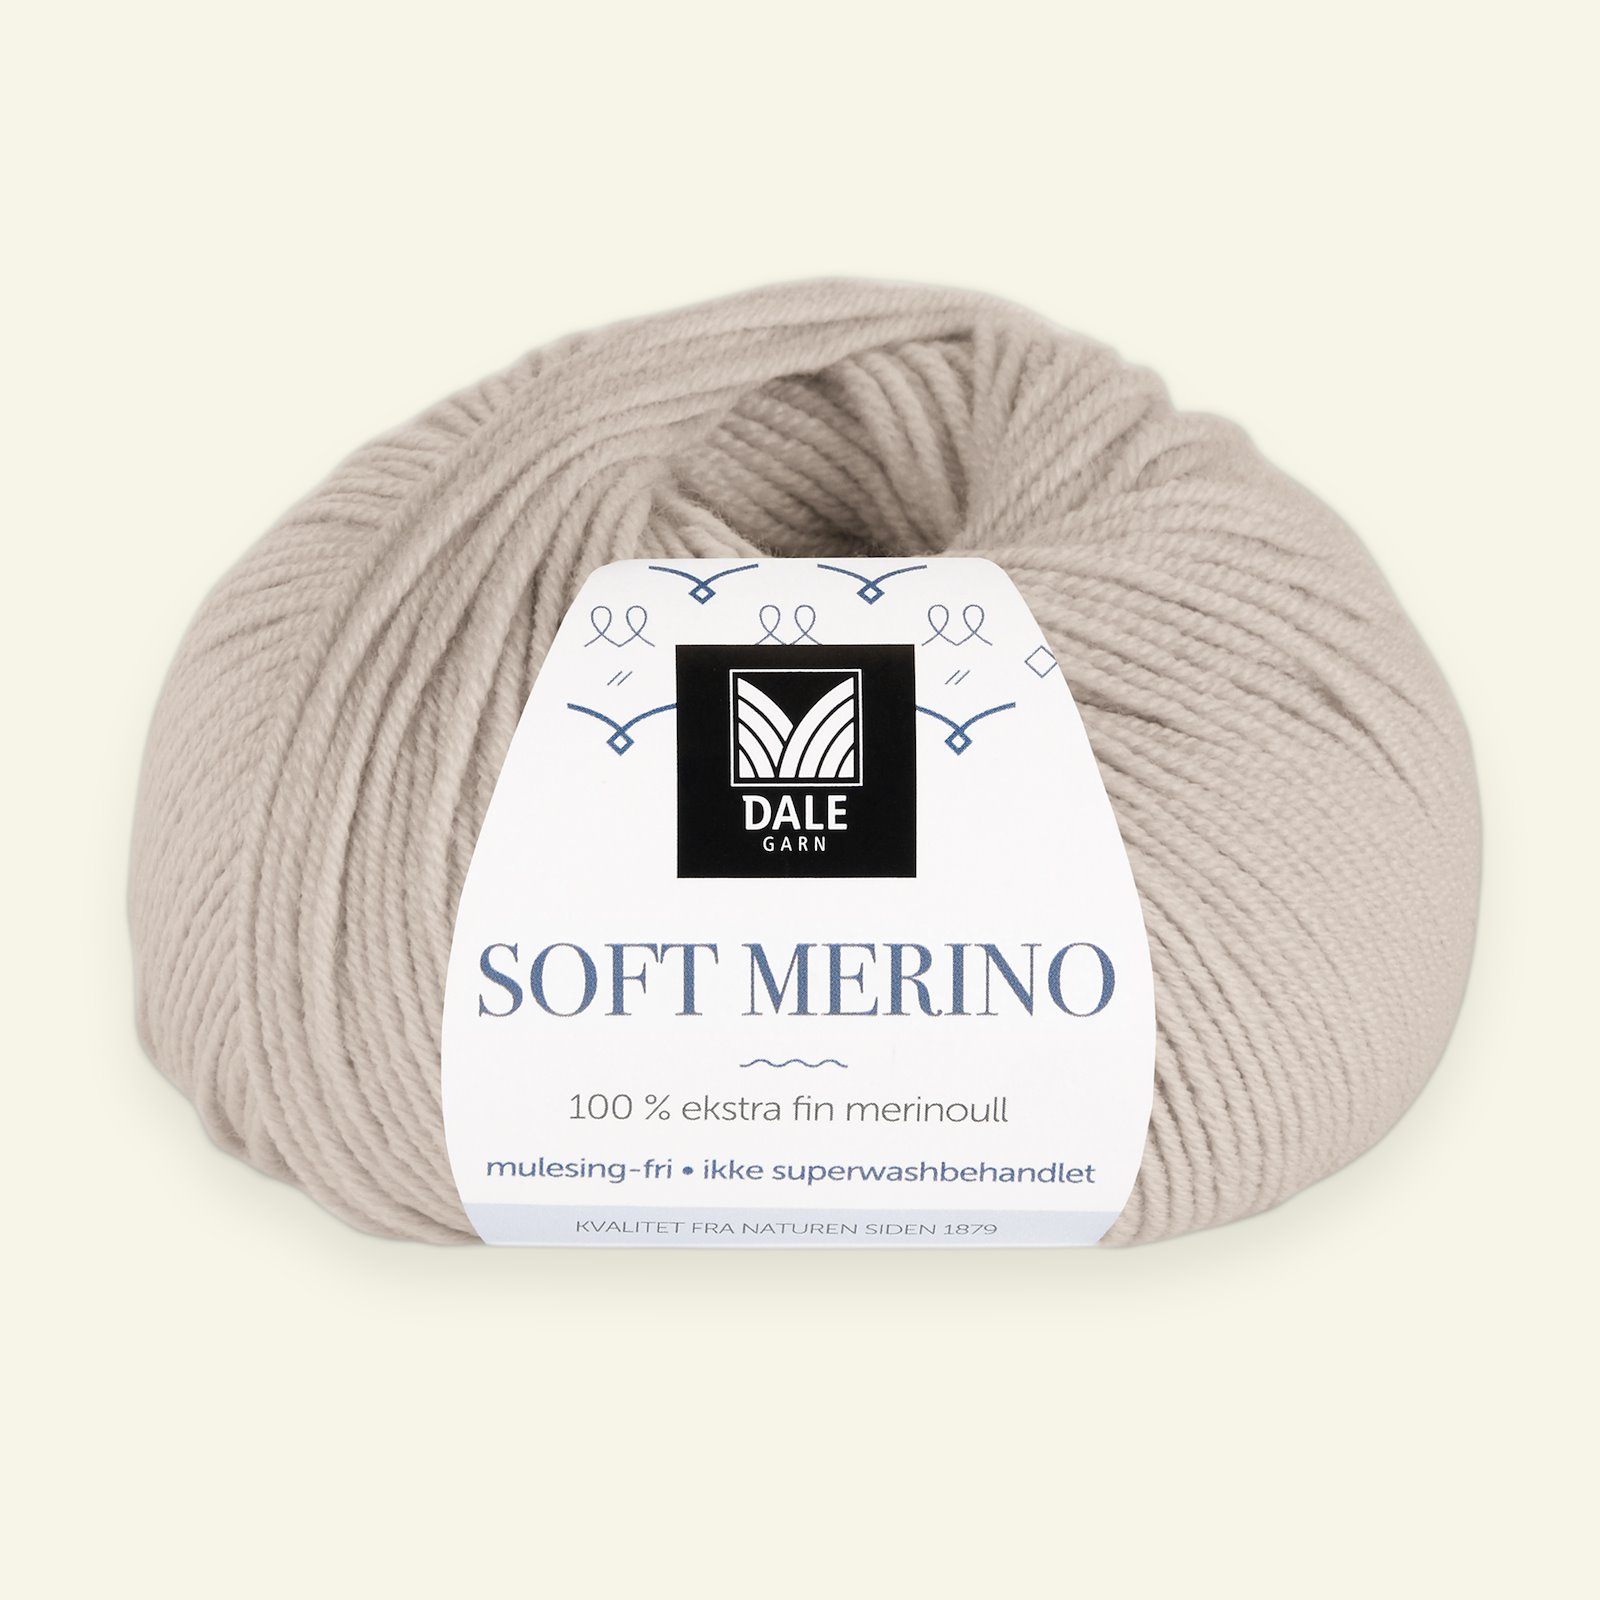 Dale Garn, 100% ekstra fint merinogarn "Soft Merino", Sand (3006) 90000327_pack